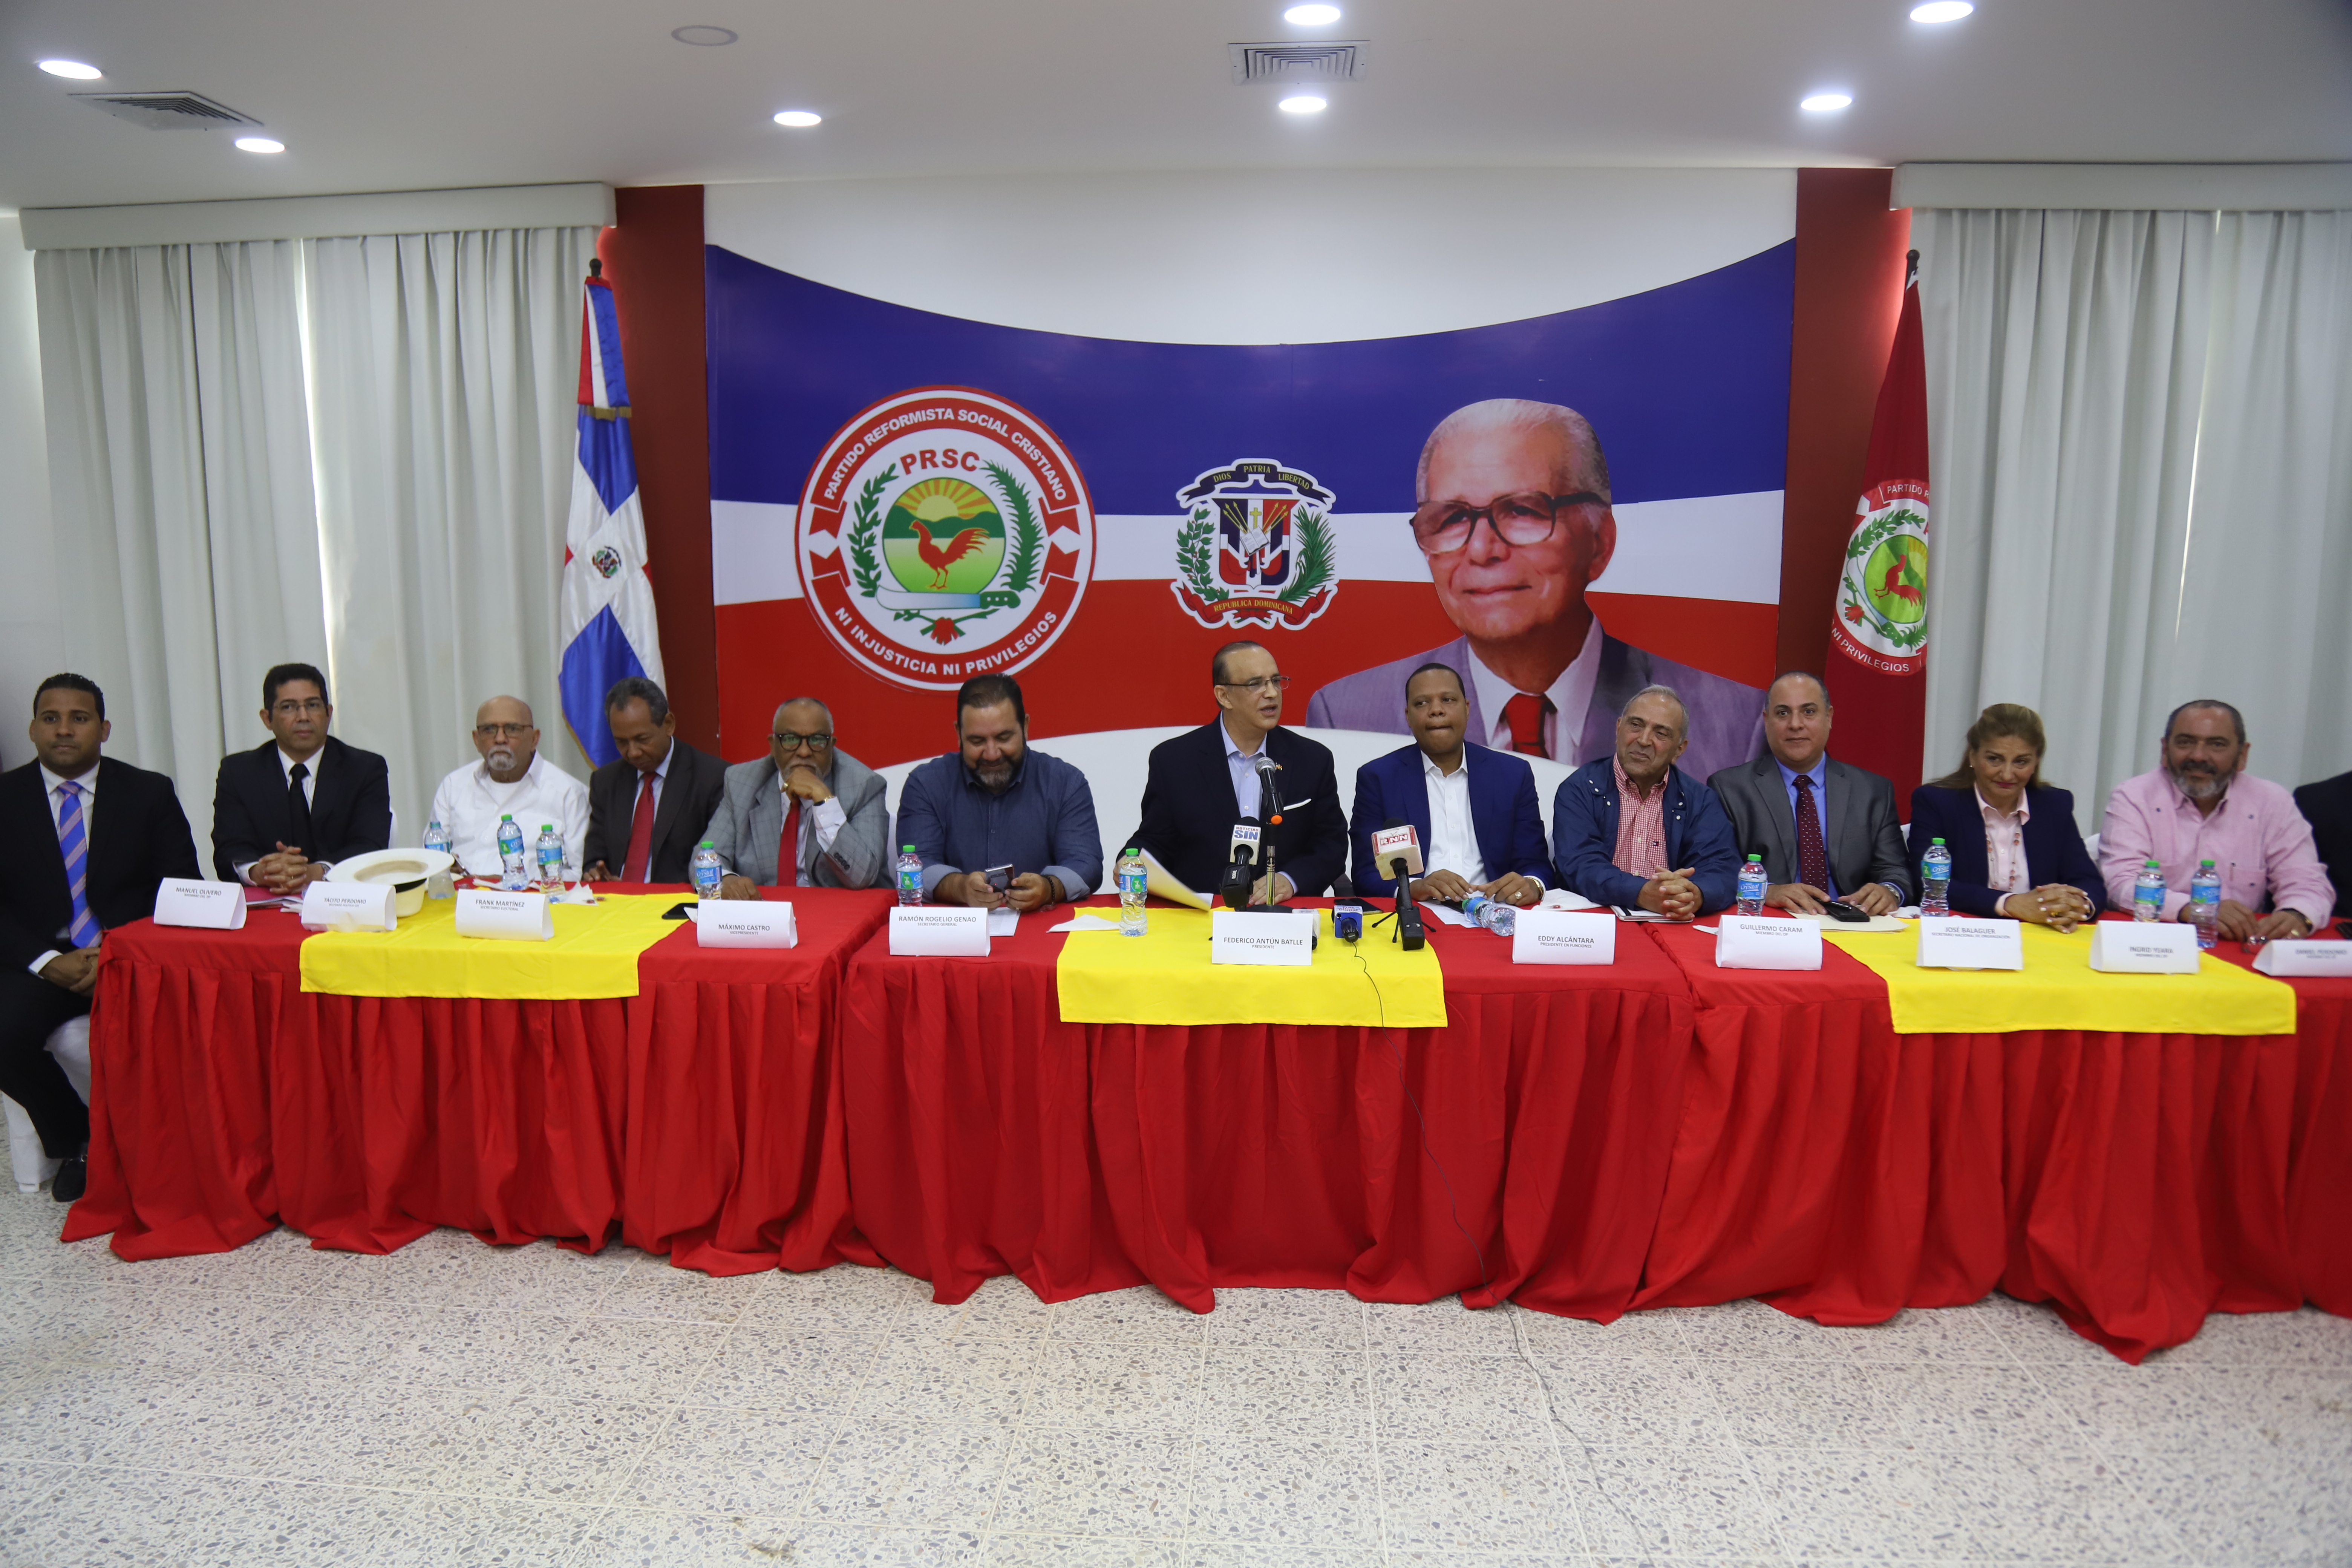 PRSC afirma a JCE y PLD “no les interesan” los votos de dominicanos en el exterior